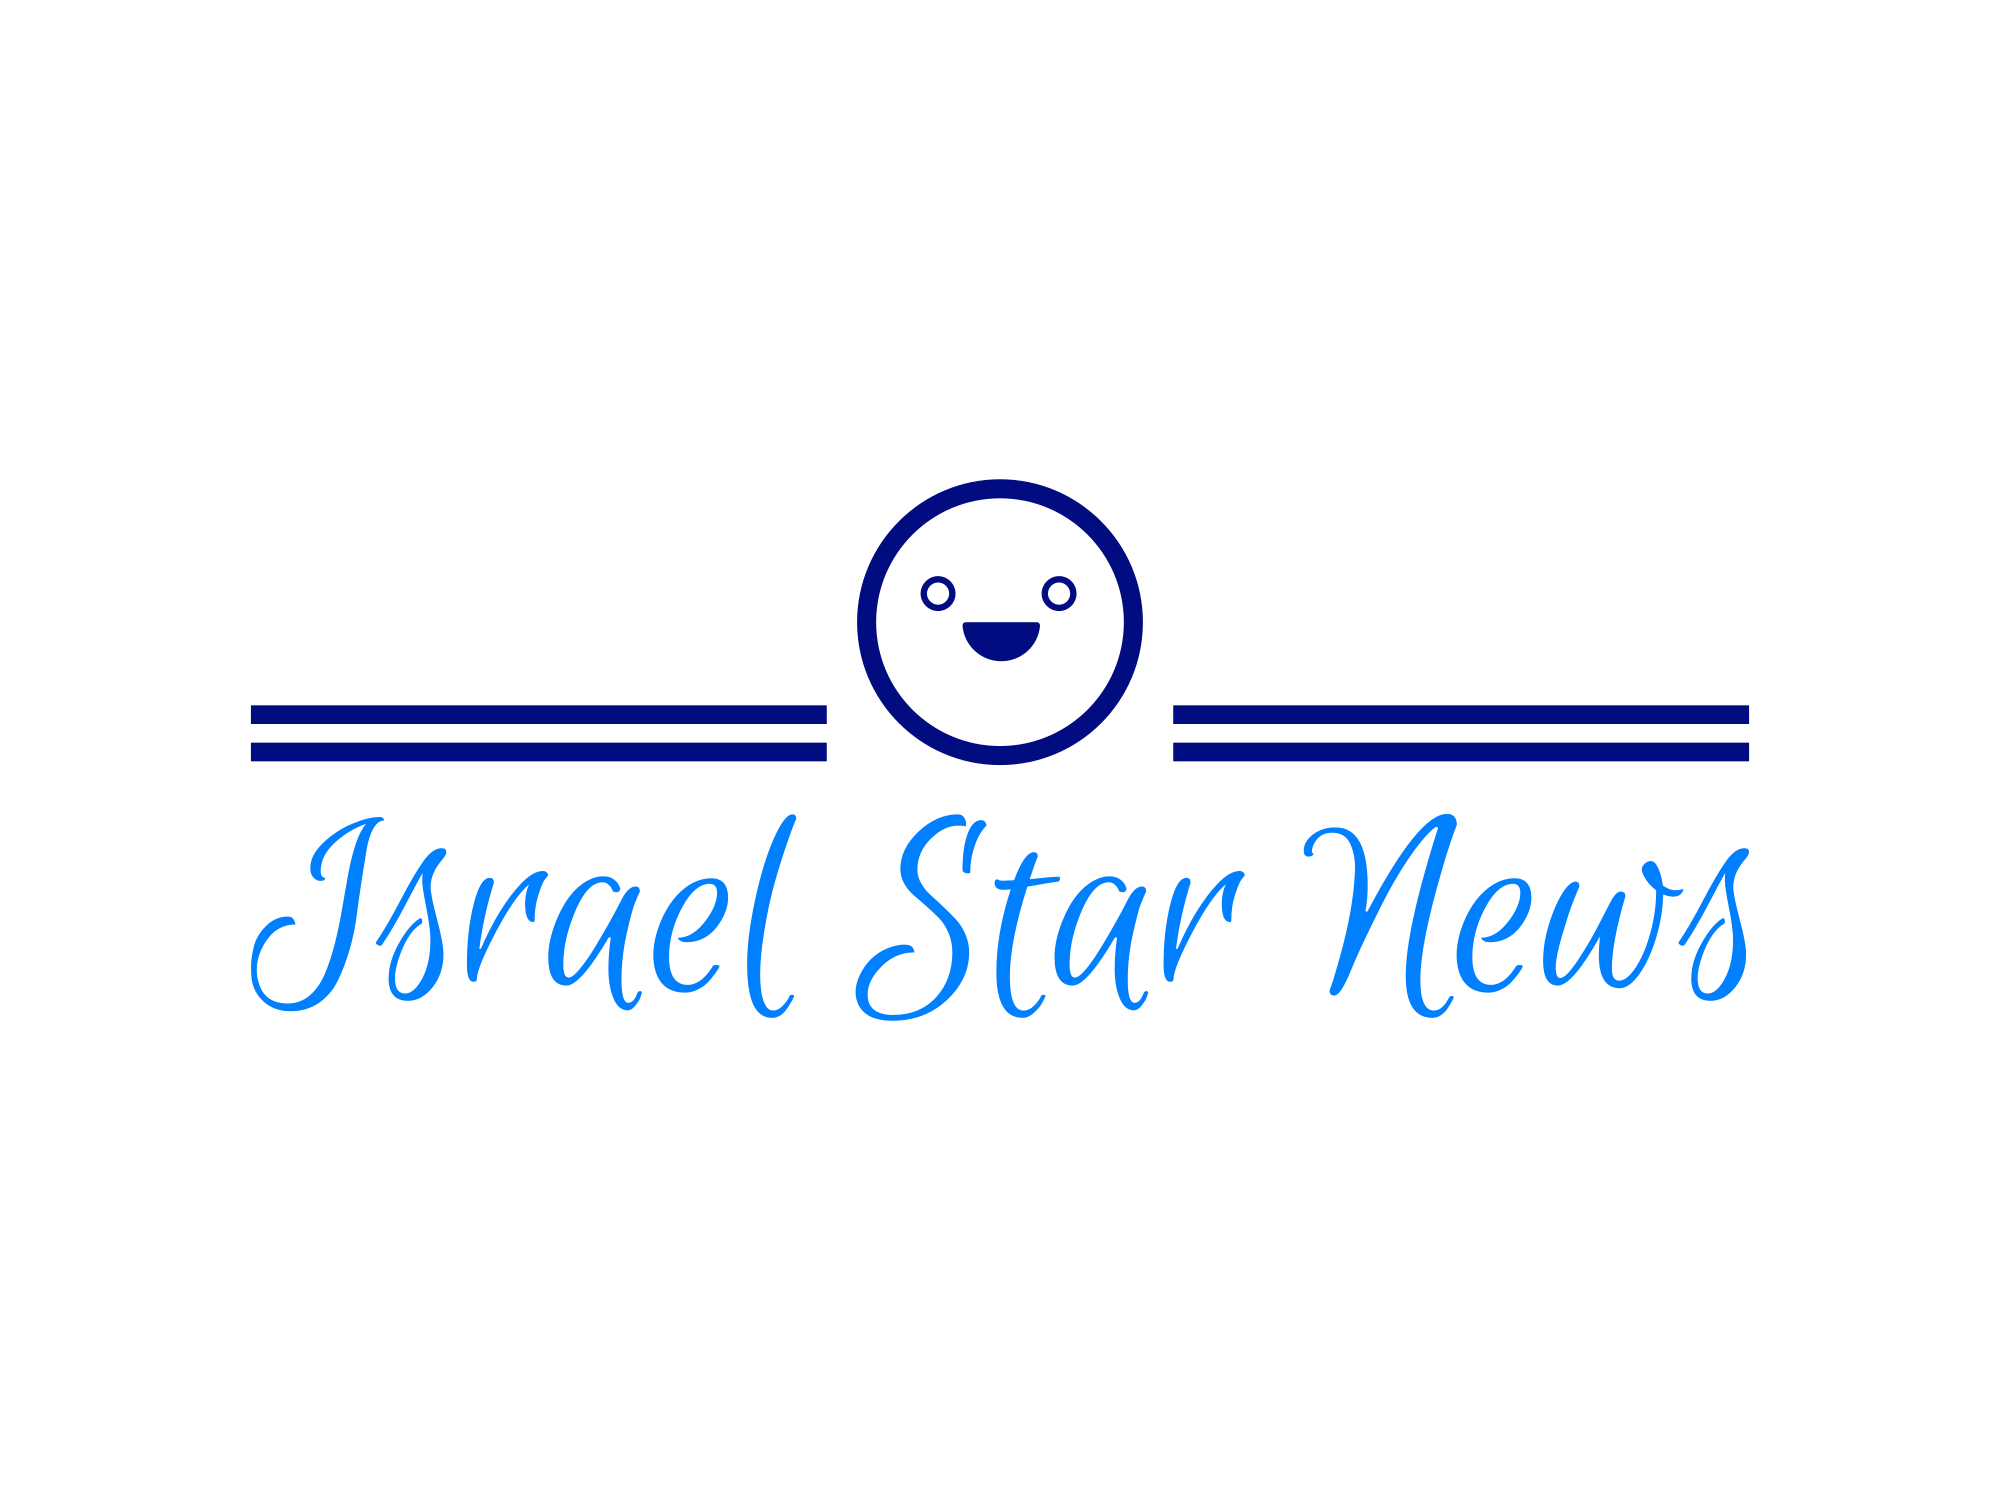 Israel Star News